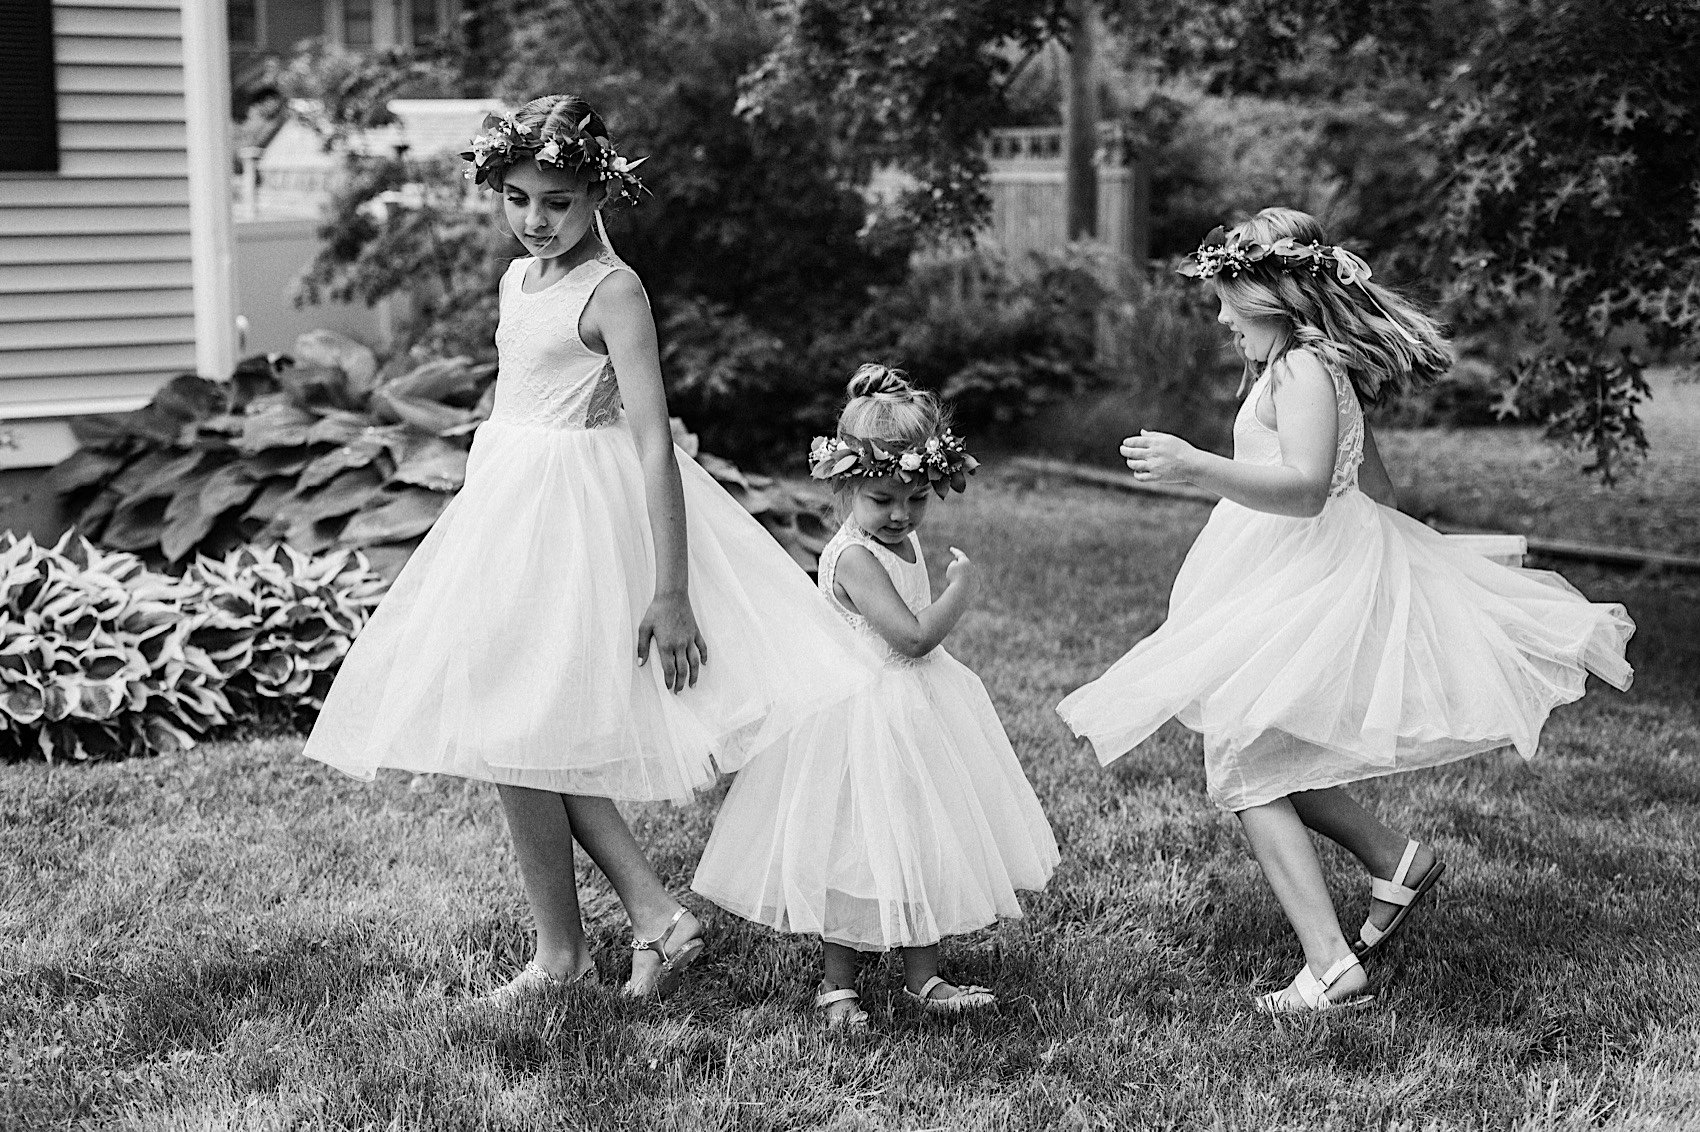 06_Plimoth patuxet plymouth massachusetts wedding photographer cape cod boston.jpg